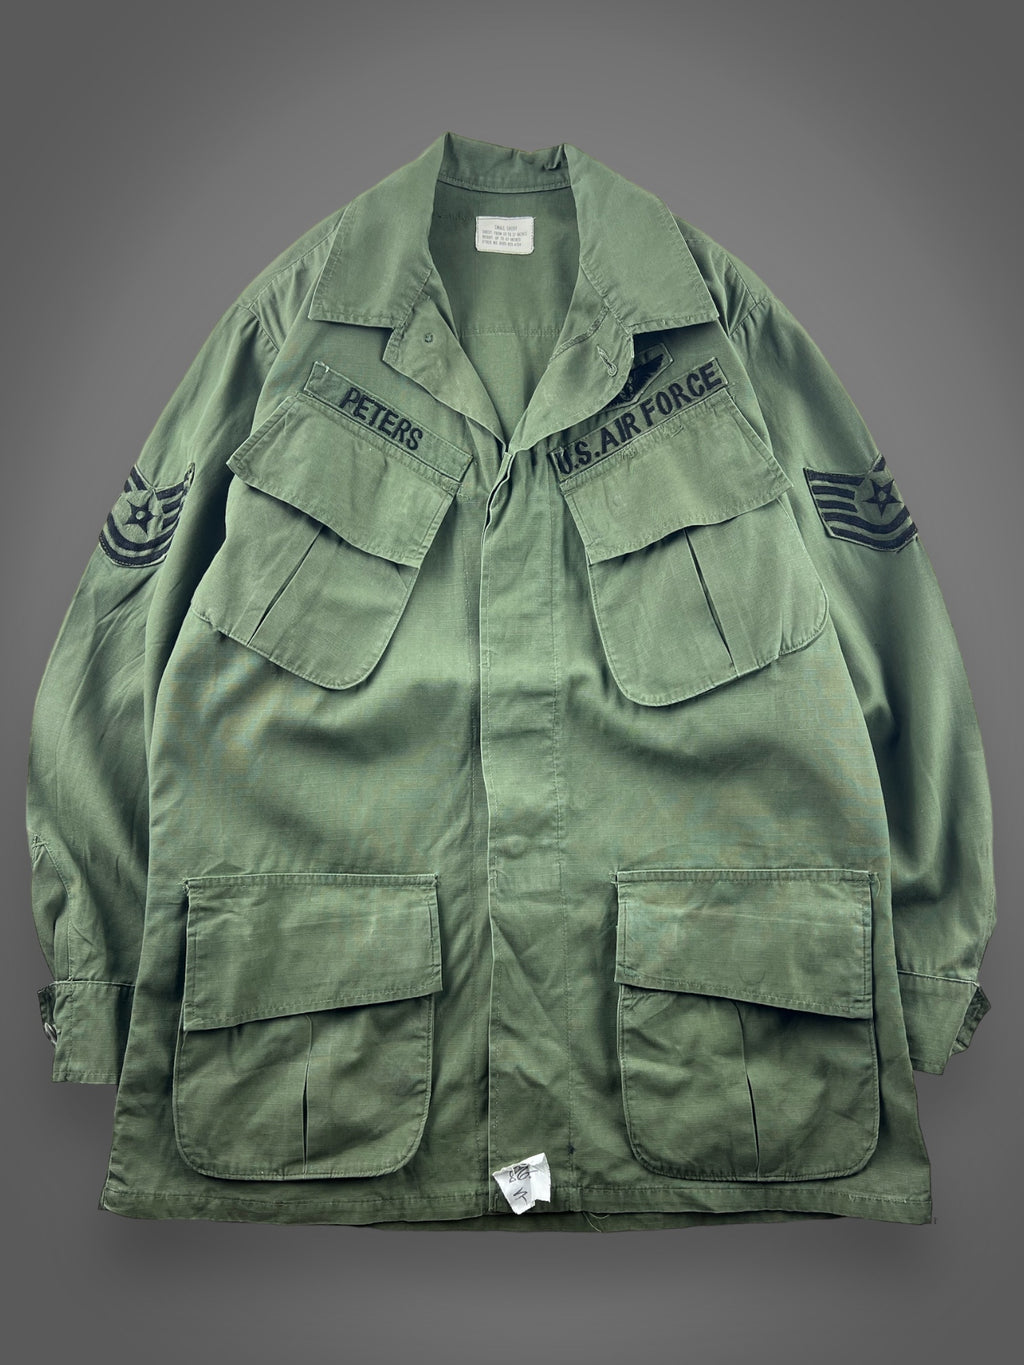 1968 USAF Vietnam tropical ripstop slant pocket shirt fits M/L